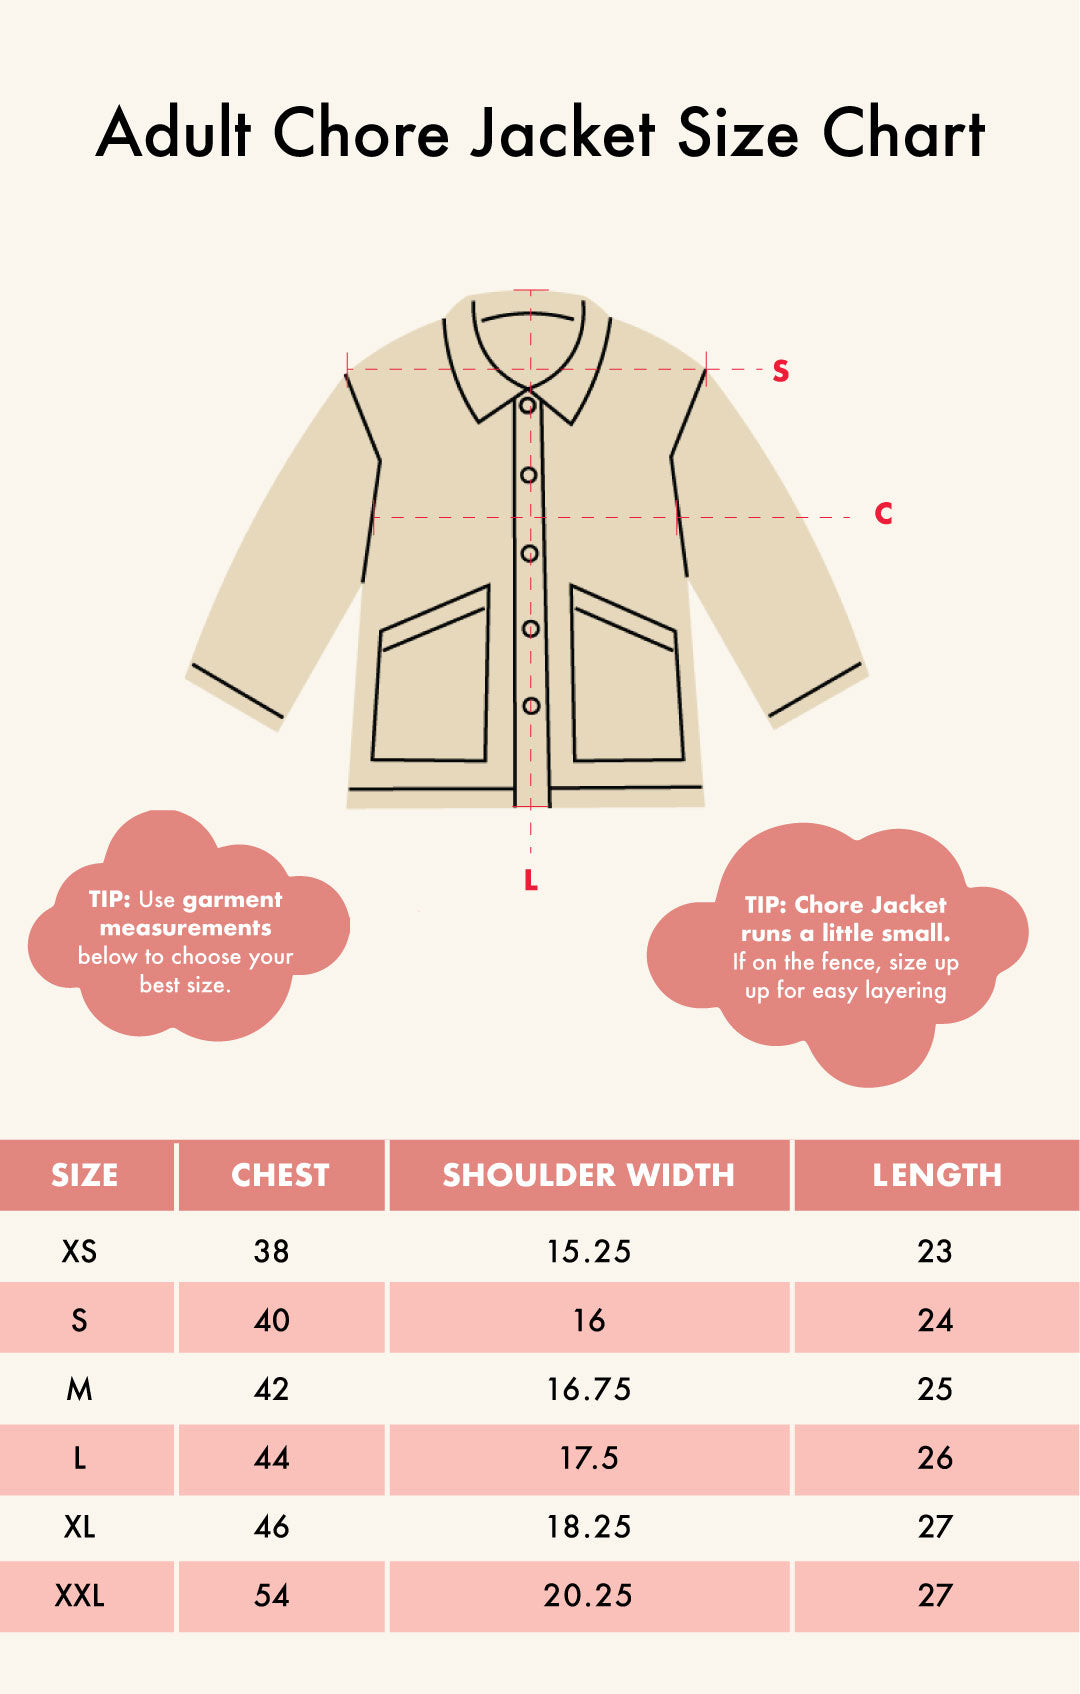 Adult Chore Jacket Size Chart